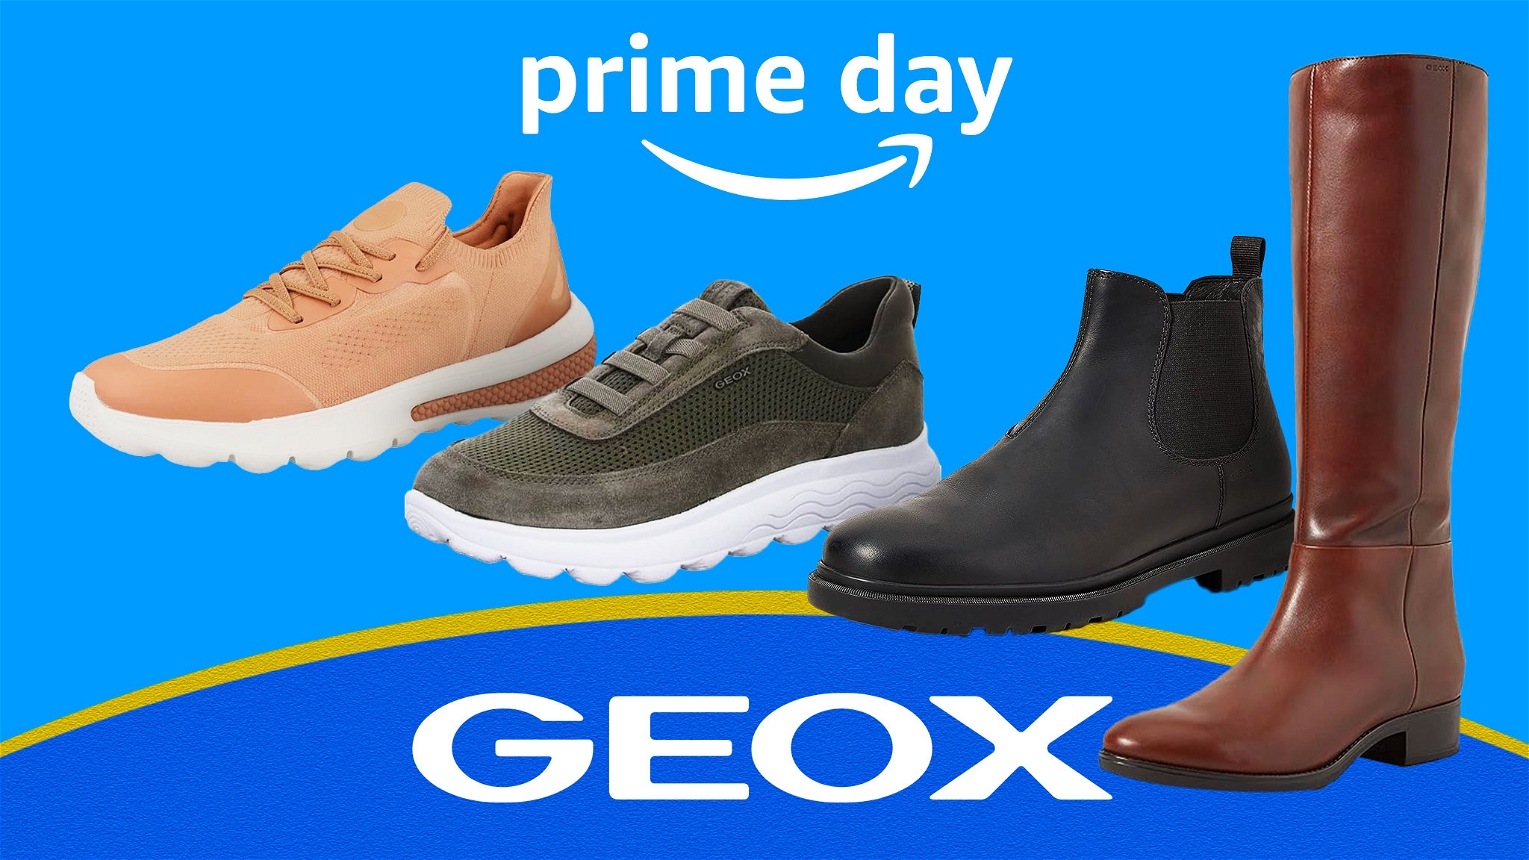 scarpe geox in offerta prime day